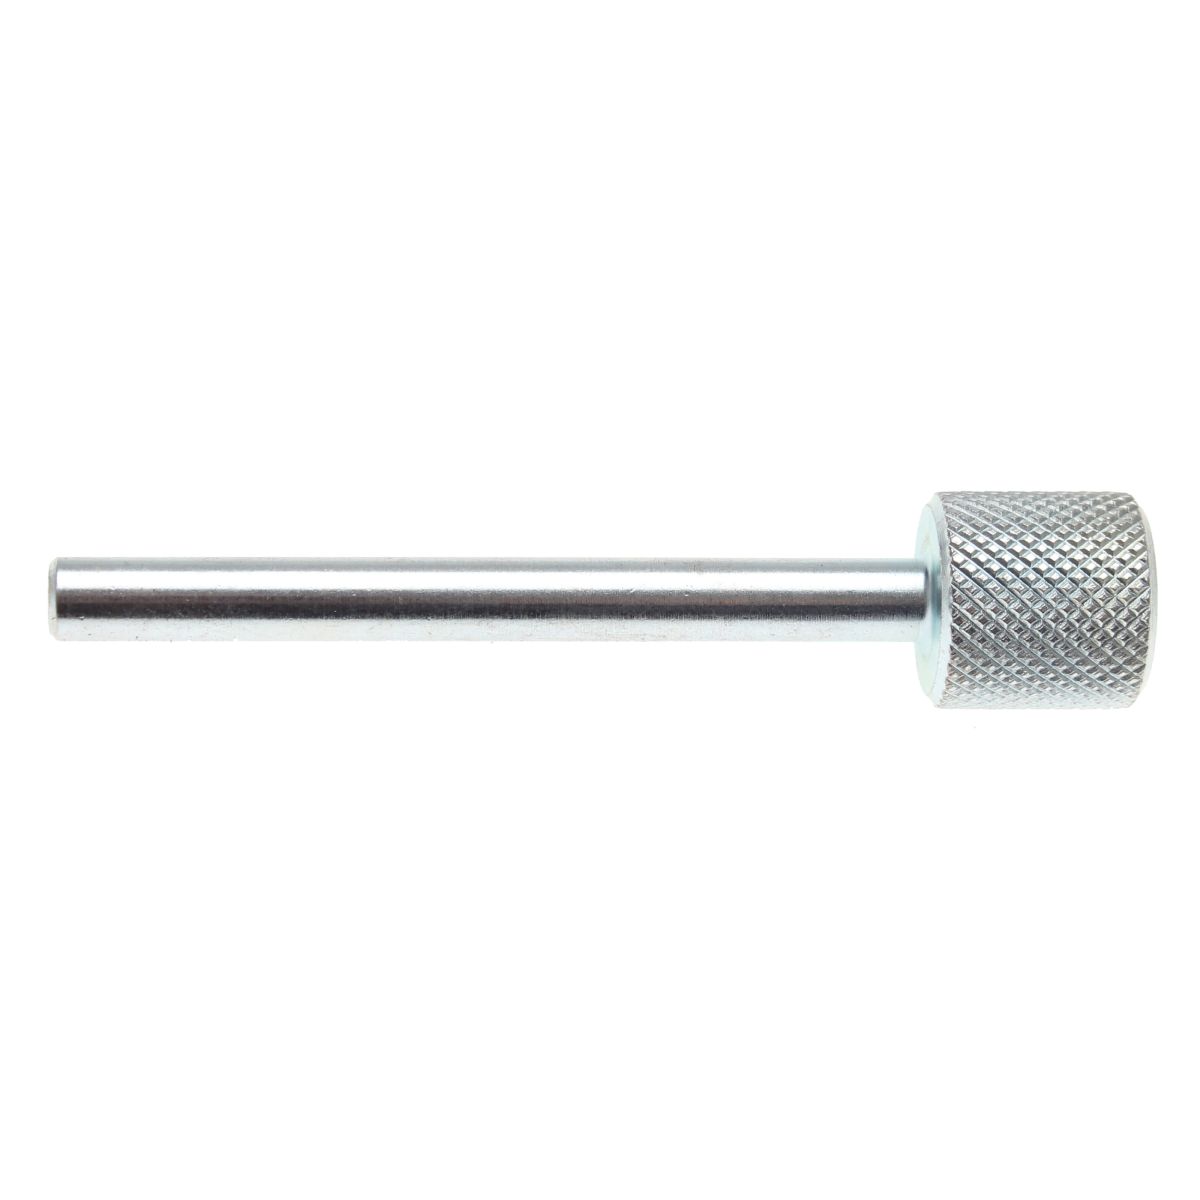 Camshaft Locking Tool | for BGS 8155